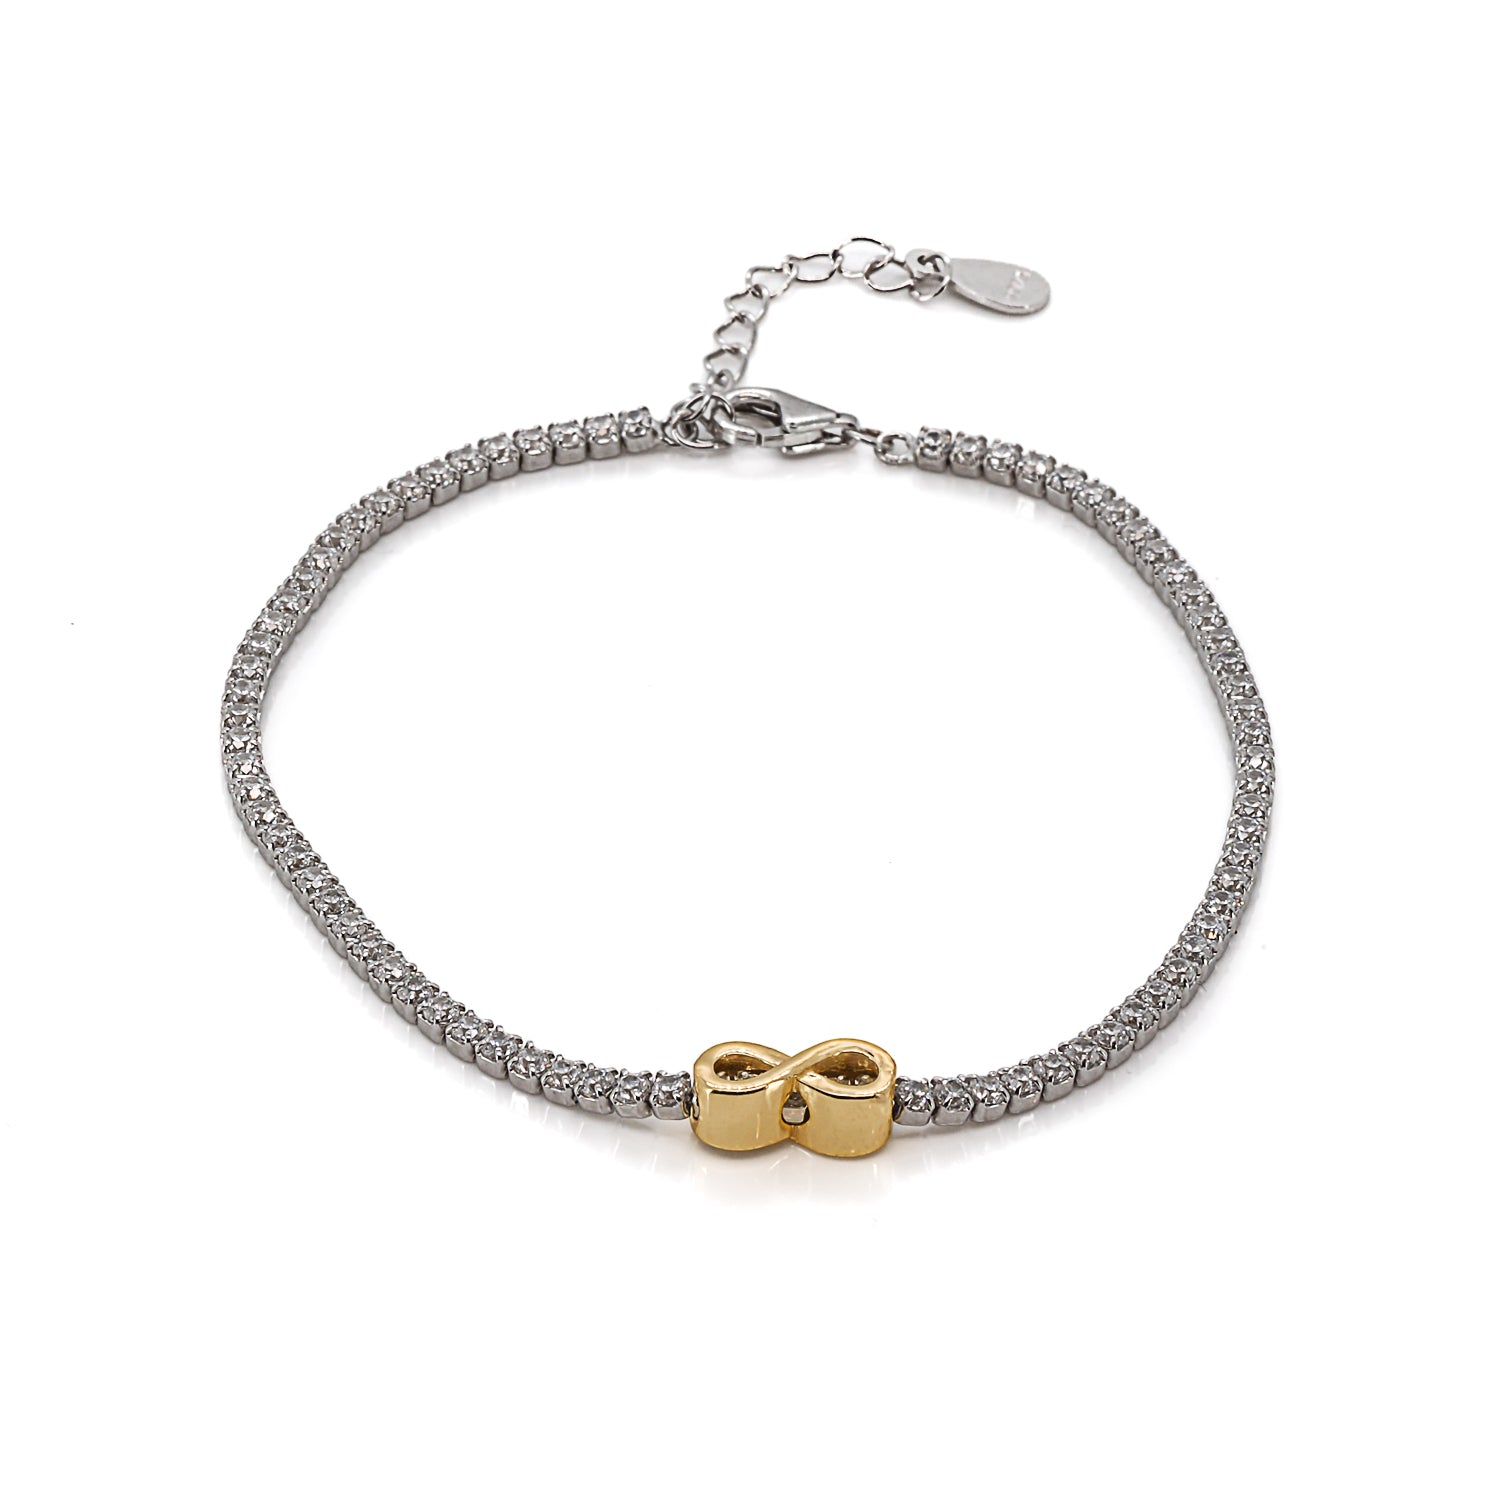 Gold Infinity Diamond Tennis Bracelet: Chic style meets timeless symbolism.